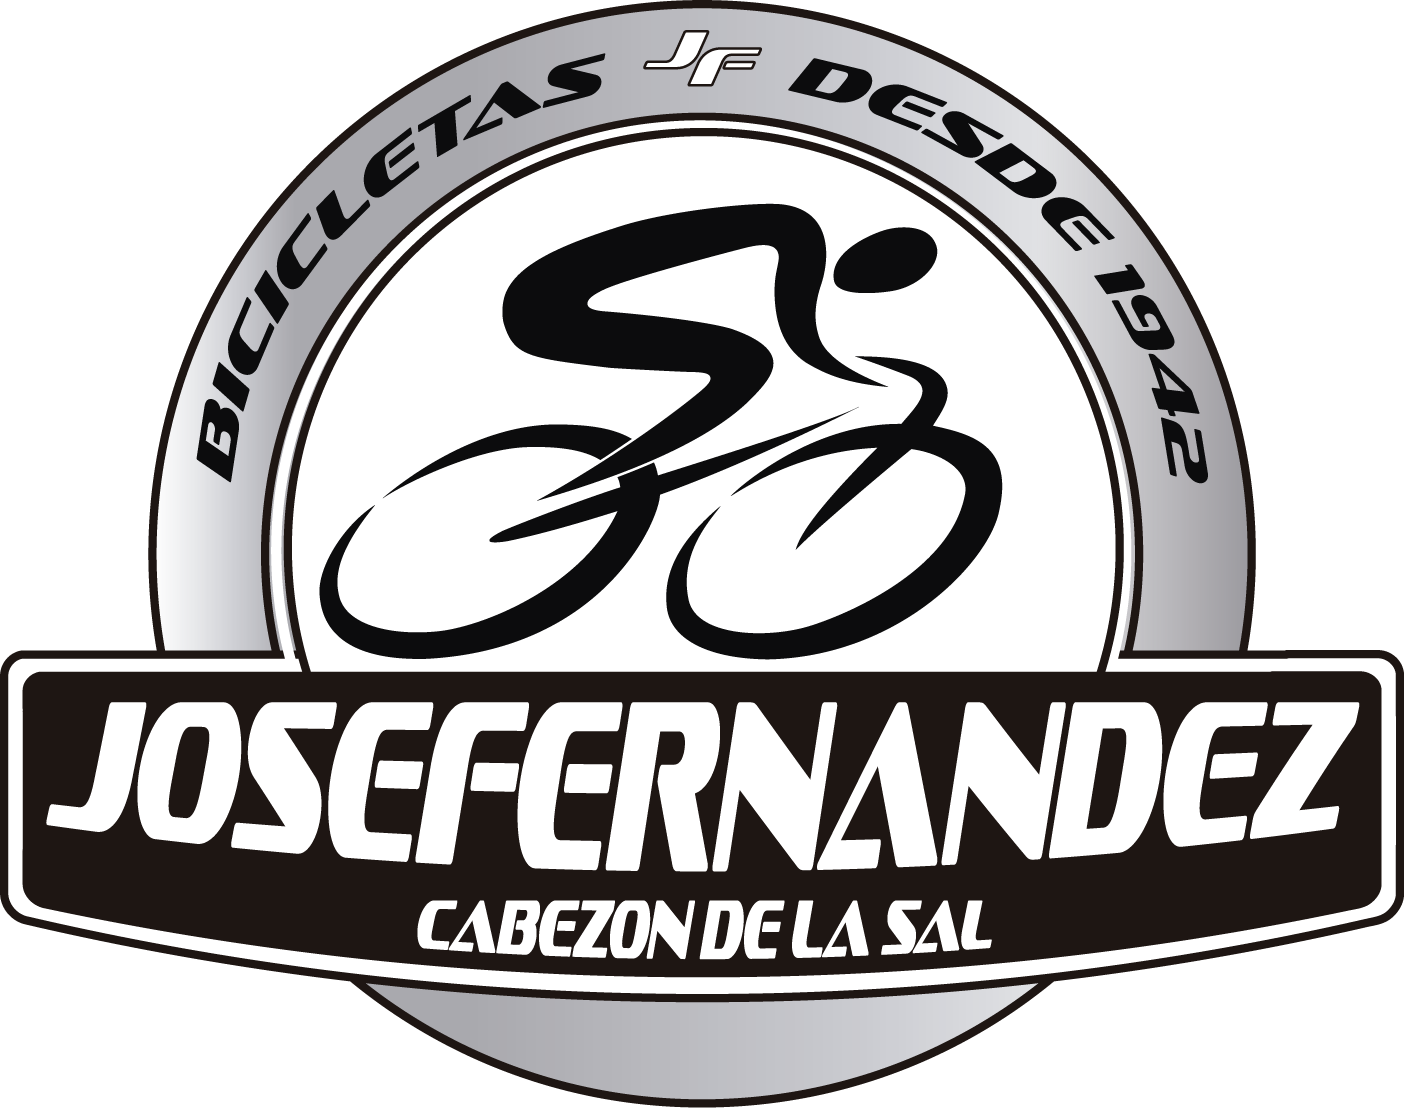 Bicicletas José Fernández